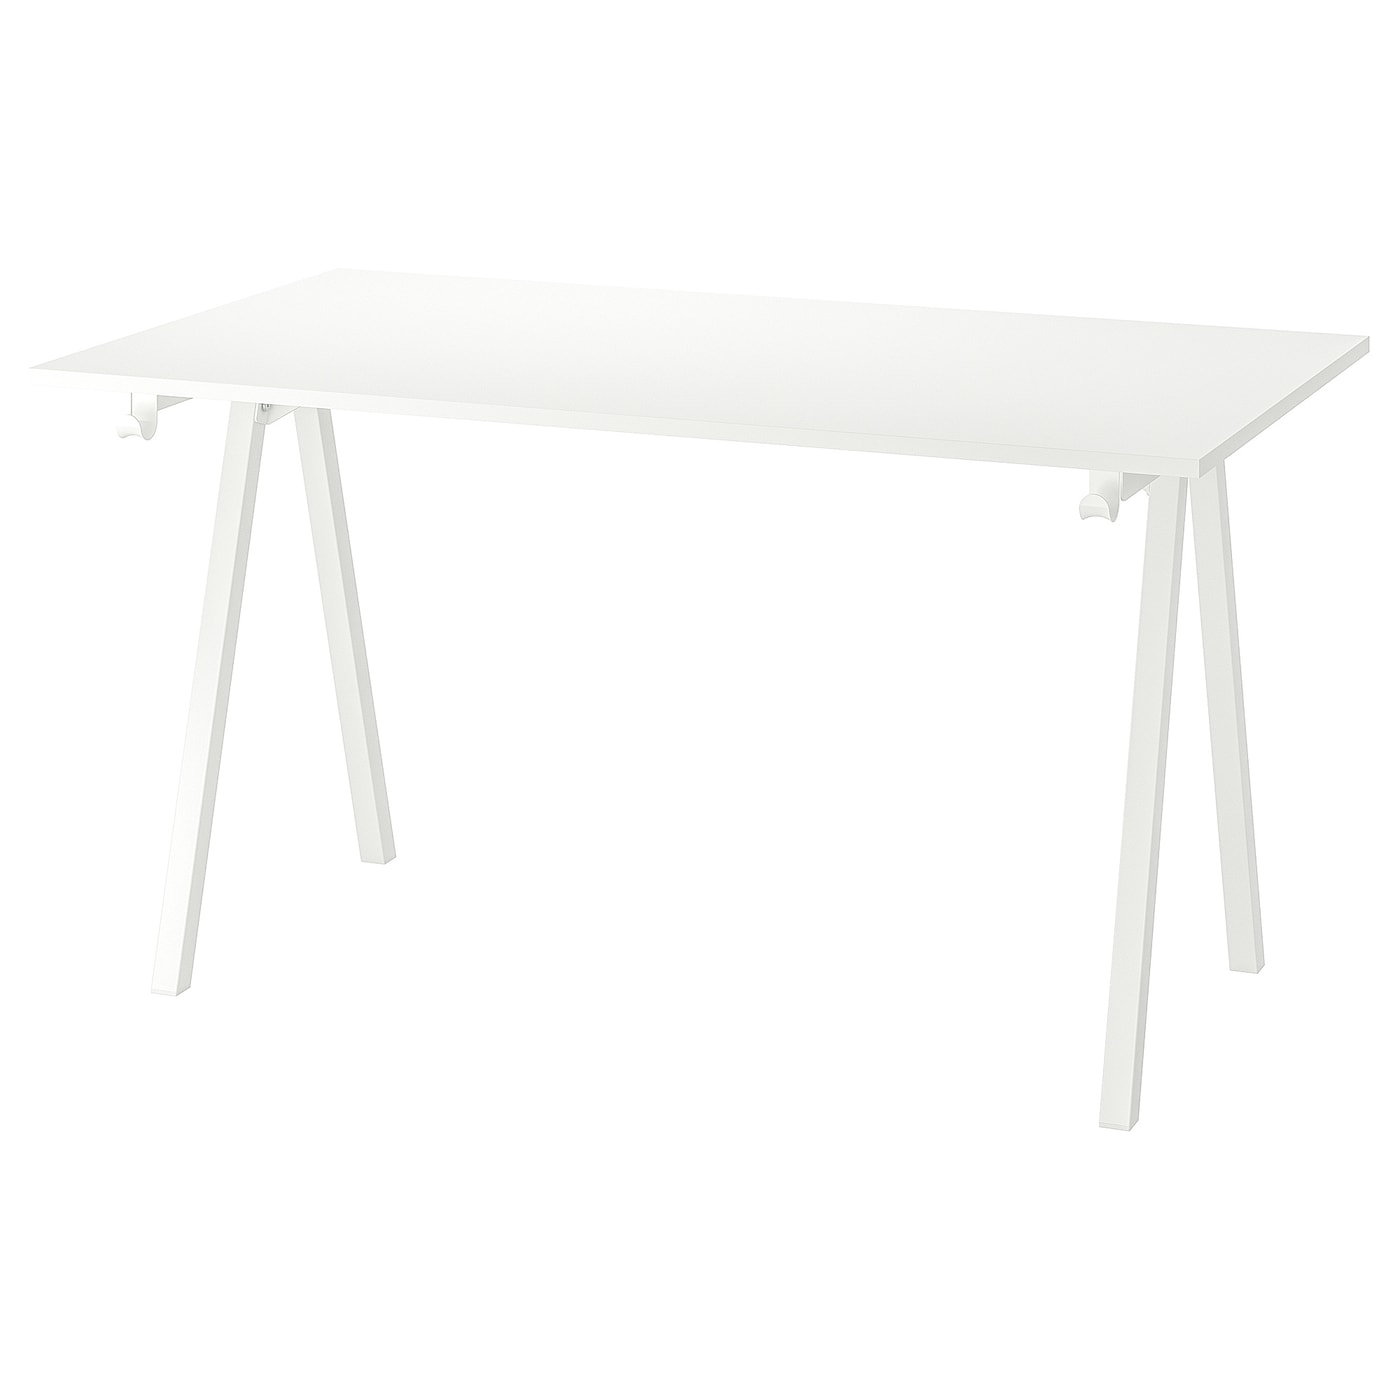 Письменный стол - IKEA TROTTEN, 140х80 см, белый, ТРОТТЕН ИКЕА